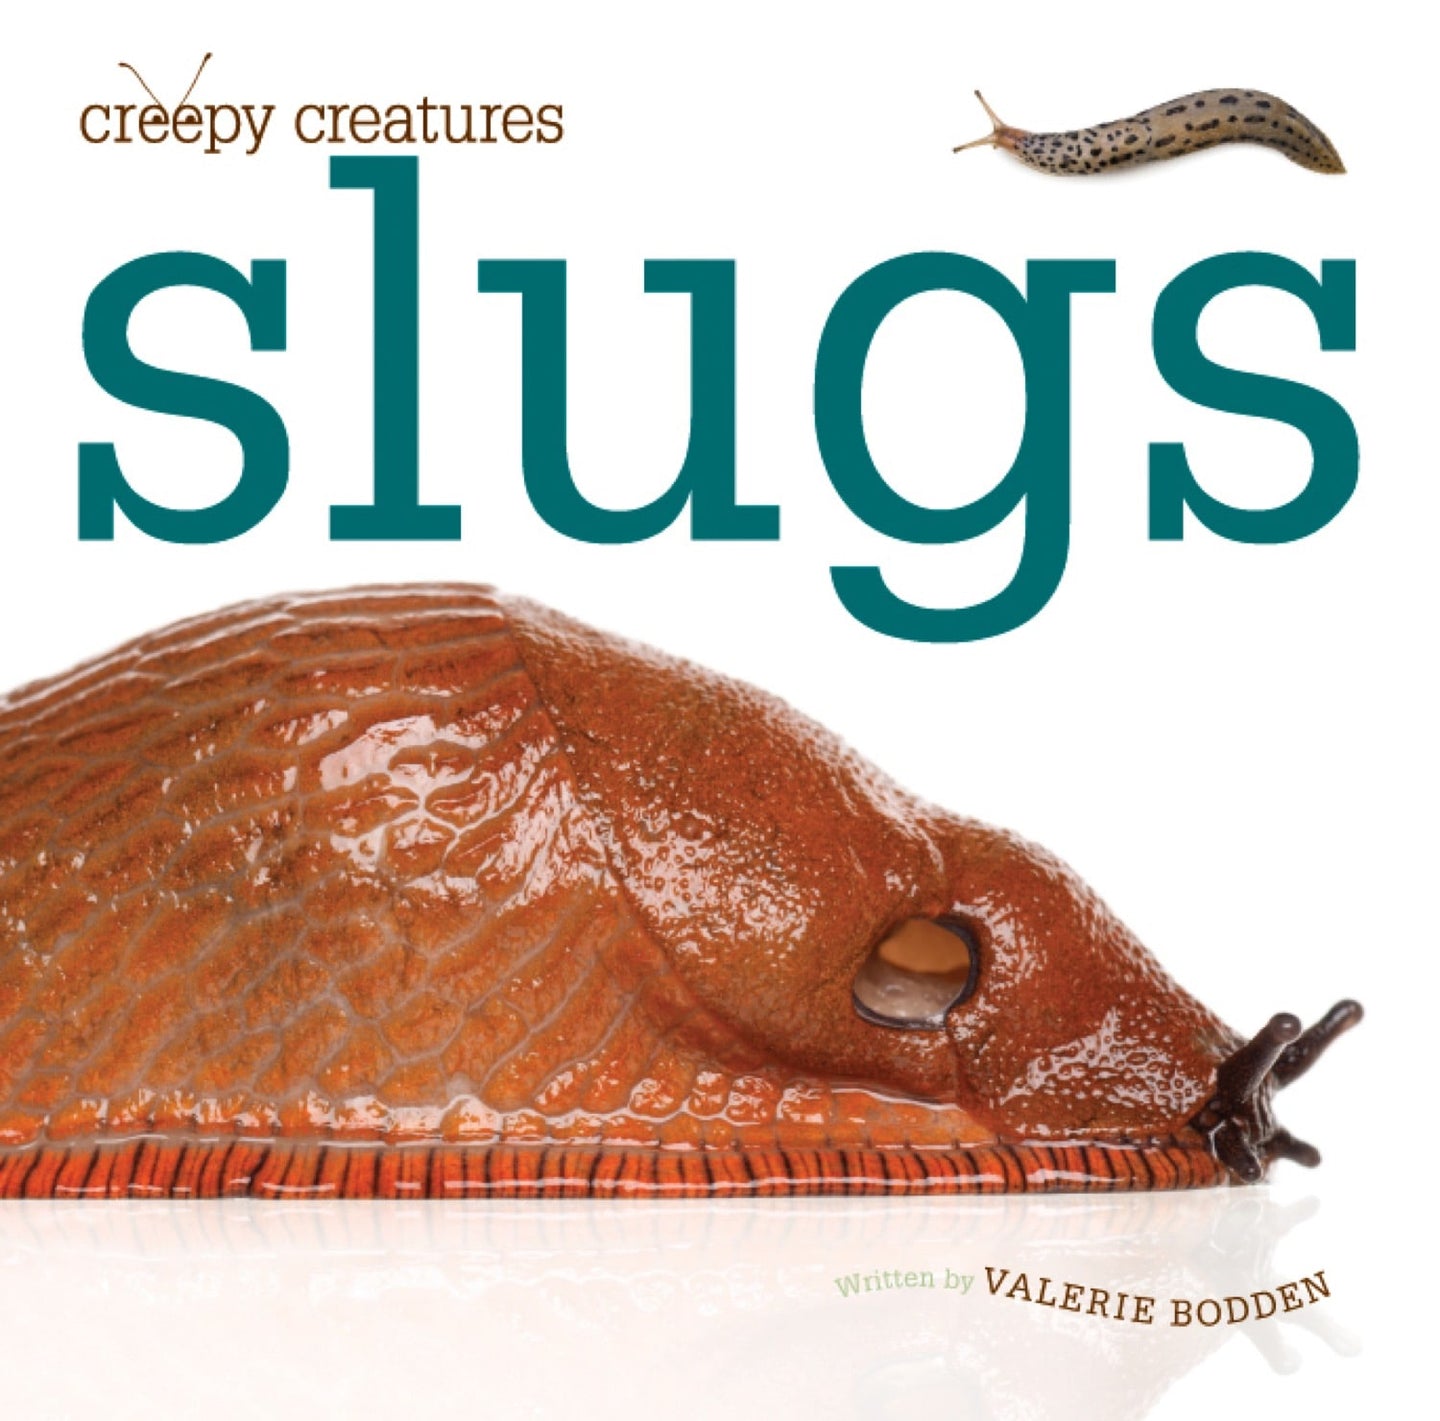 Creepy Creatures: Slugs